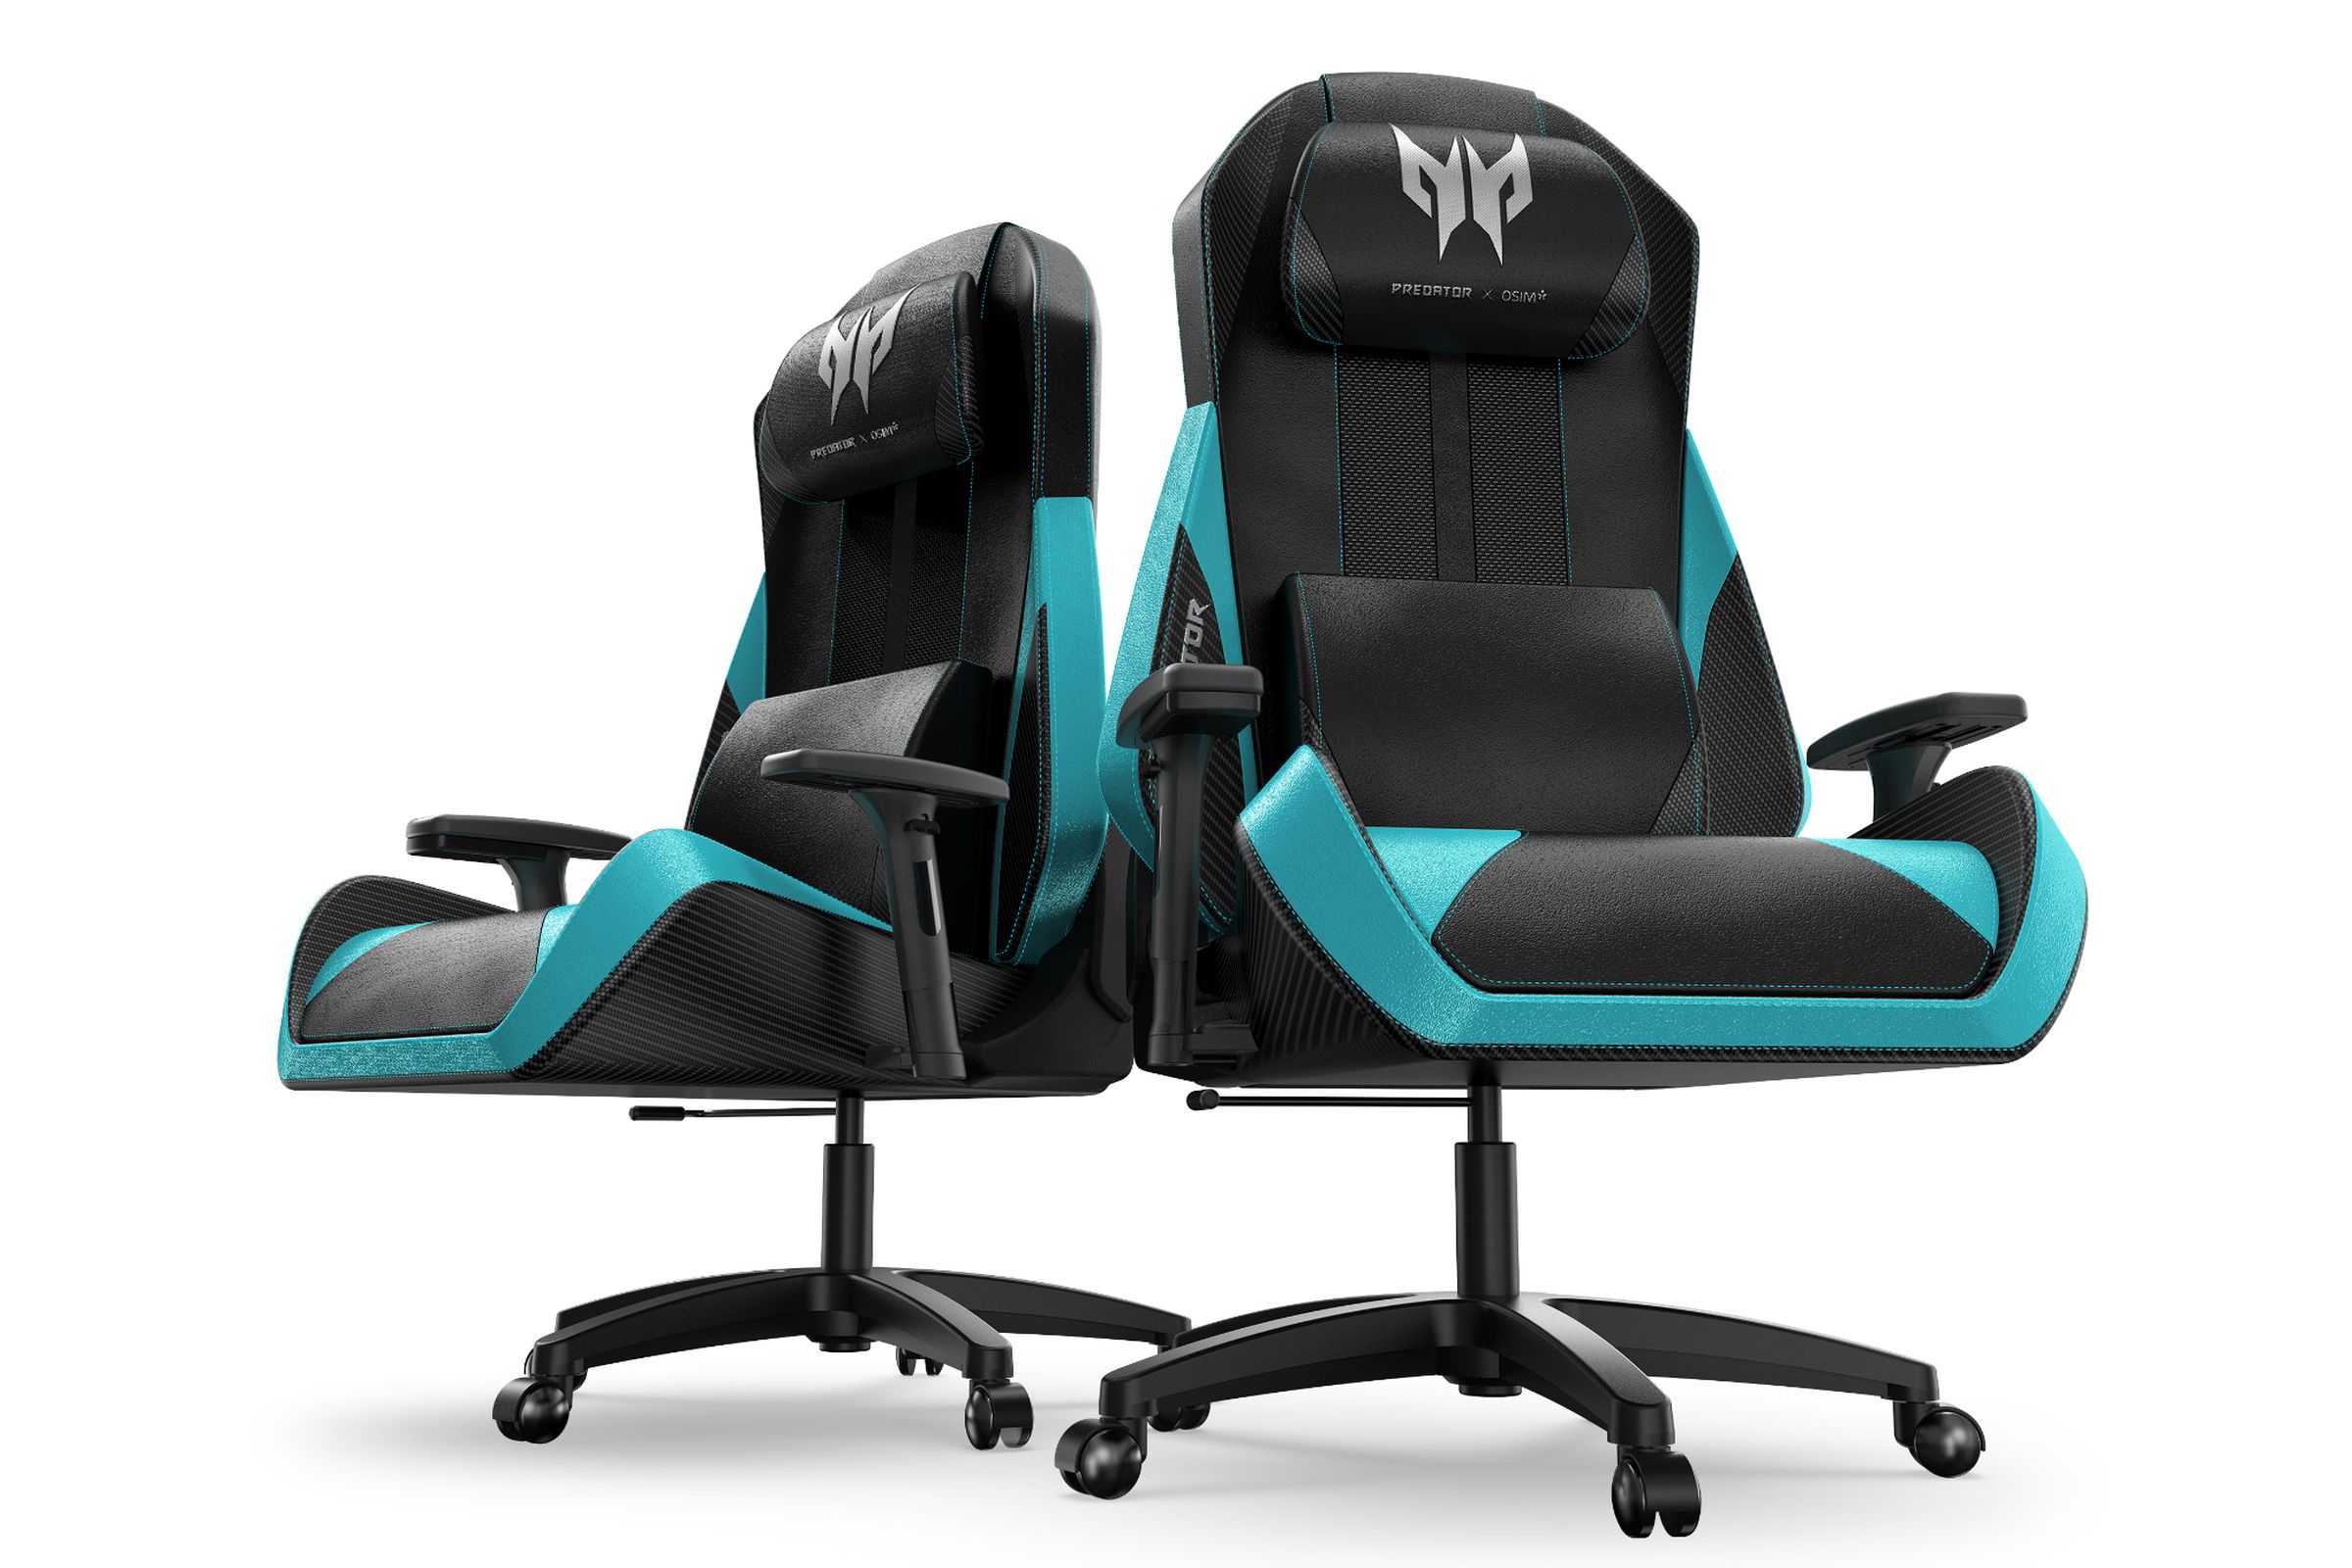 Acer Predator gaming chair